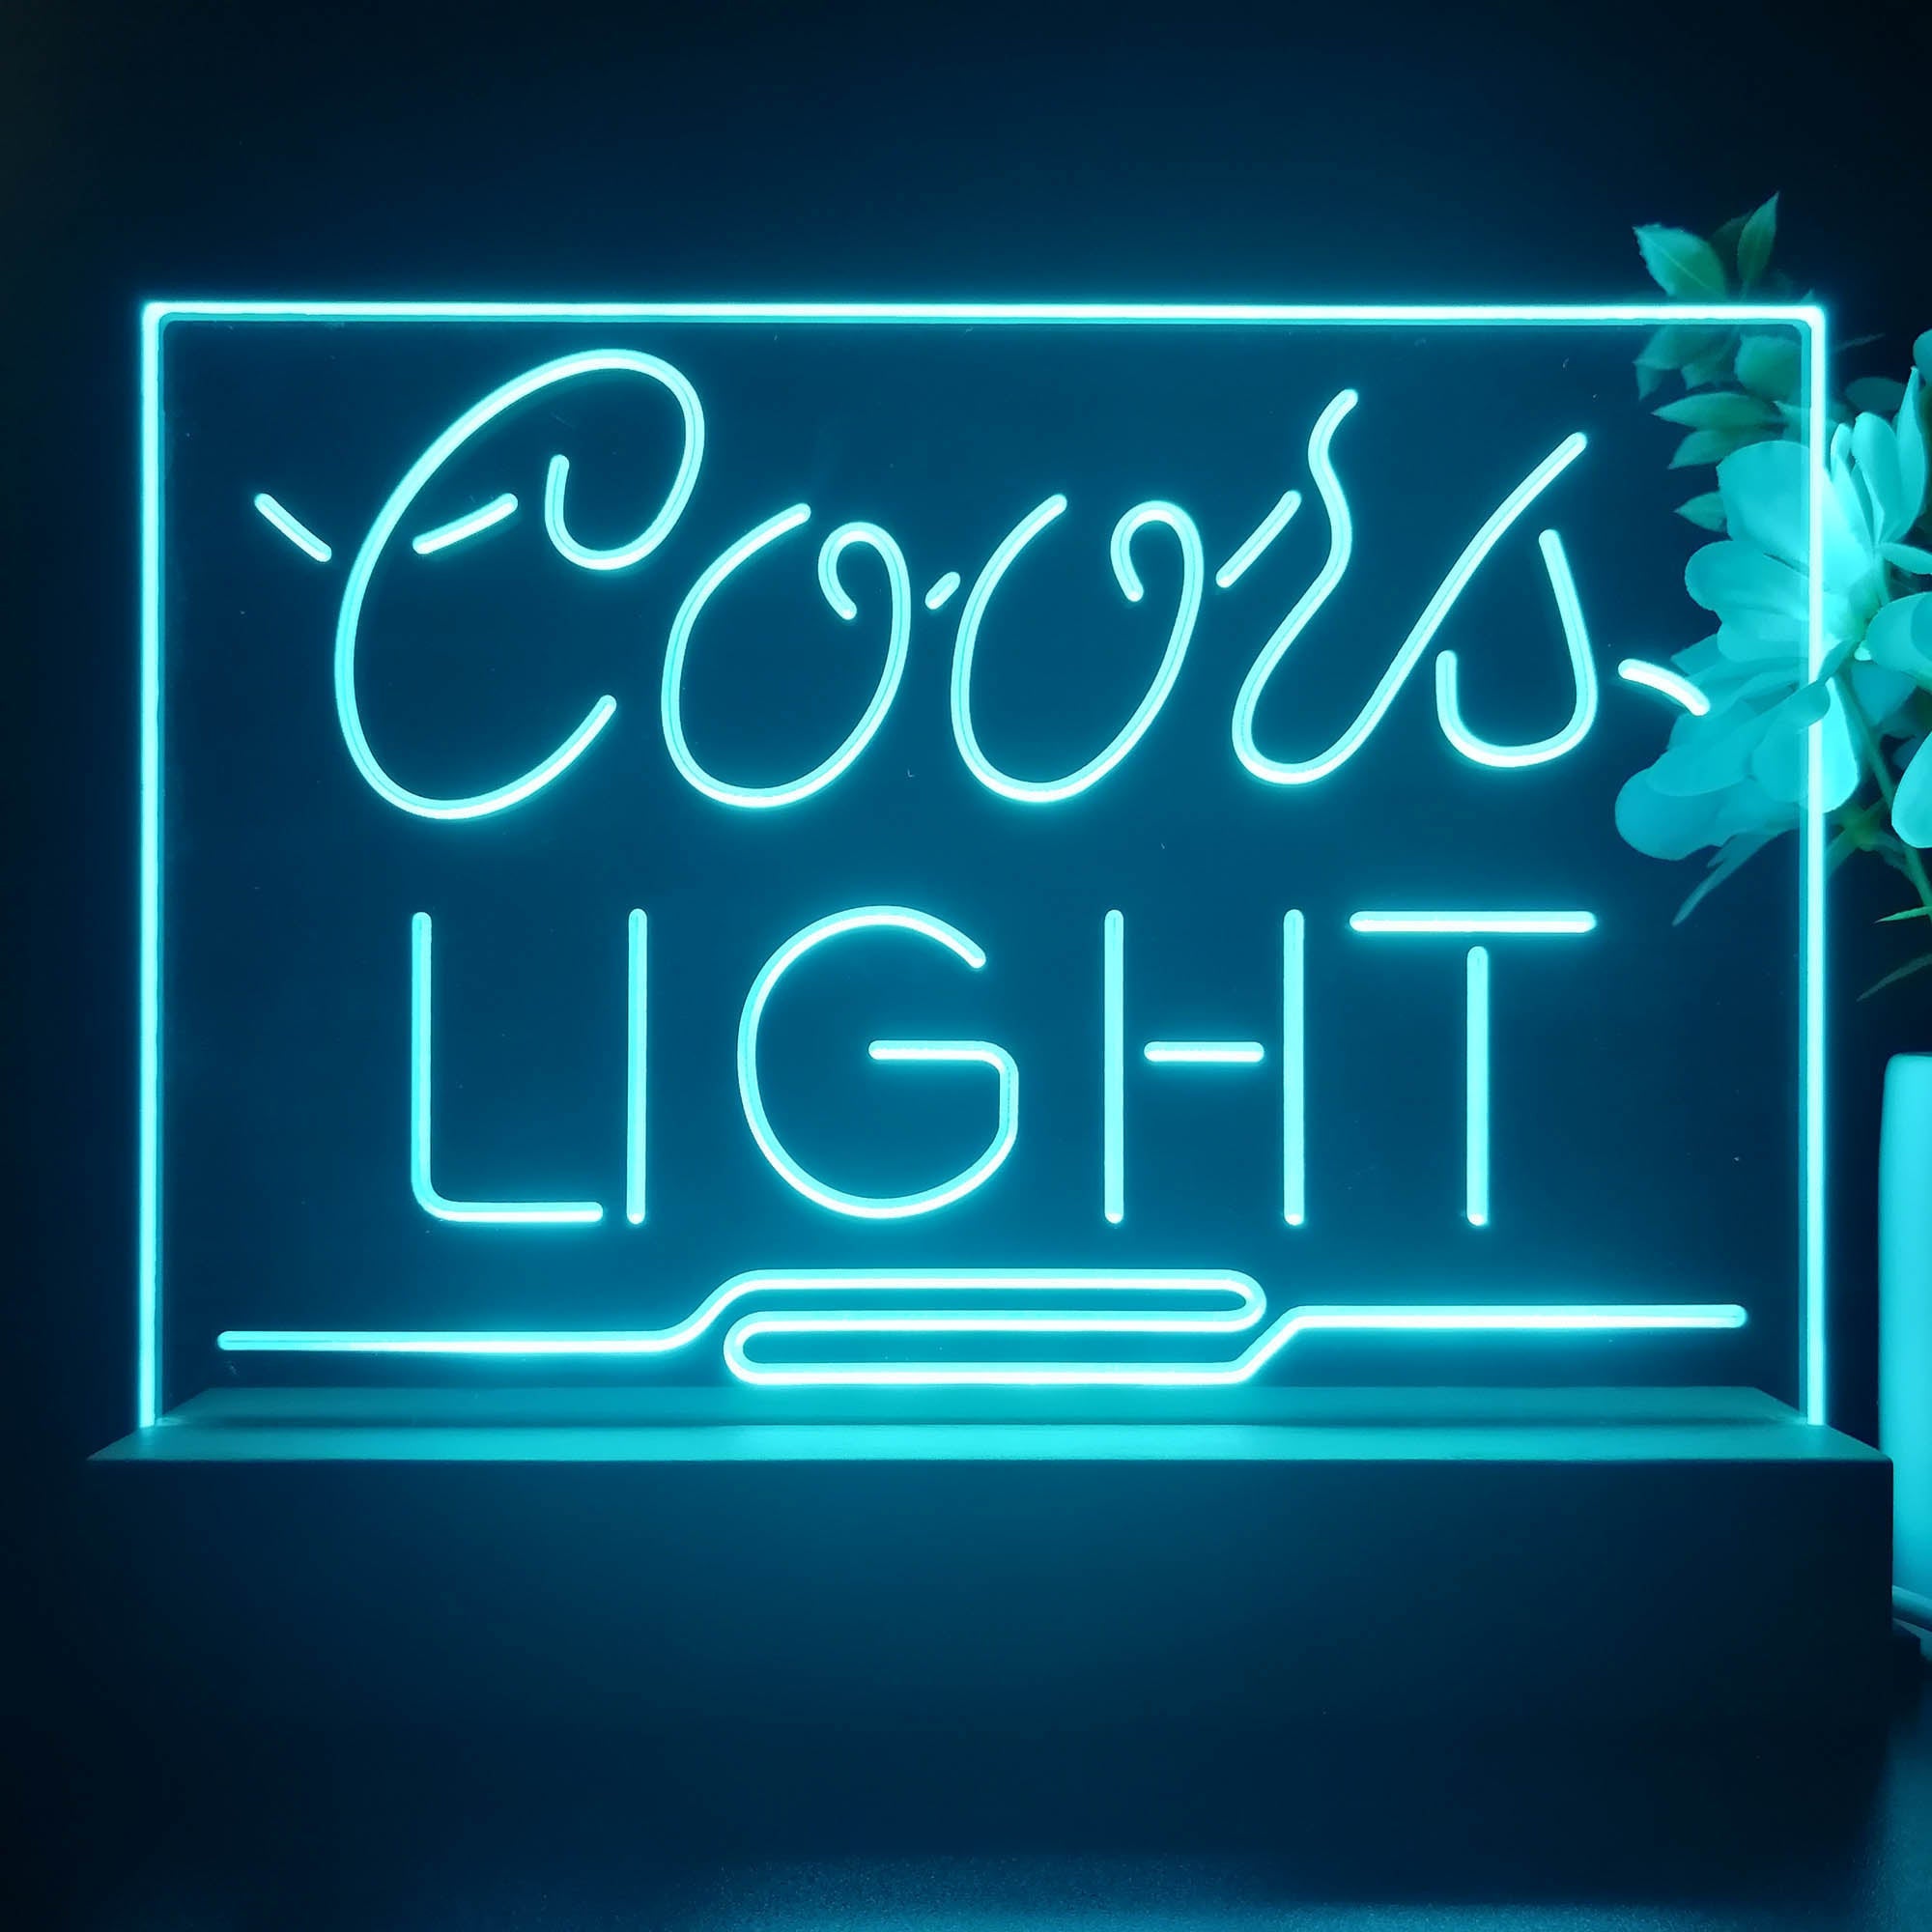 Coors Light Sport Beer Neon Sign Pub Bar Lamp